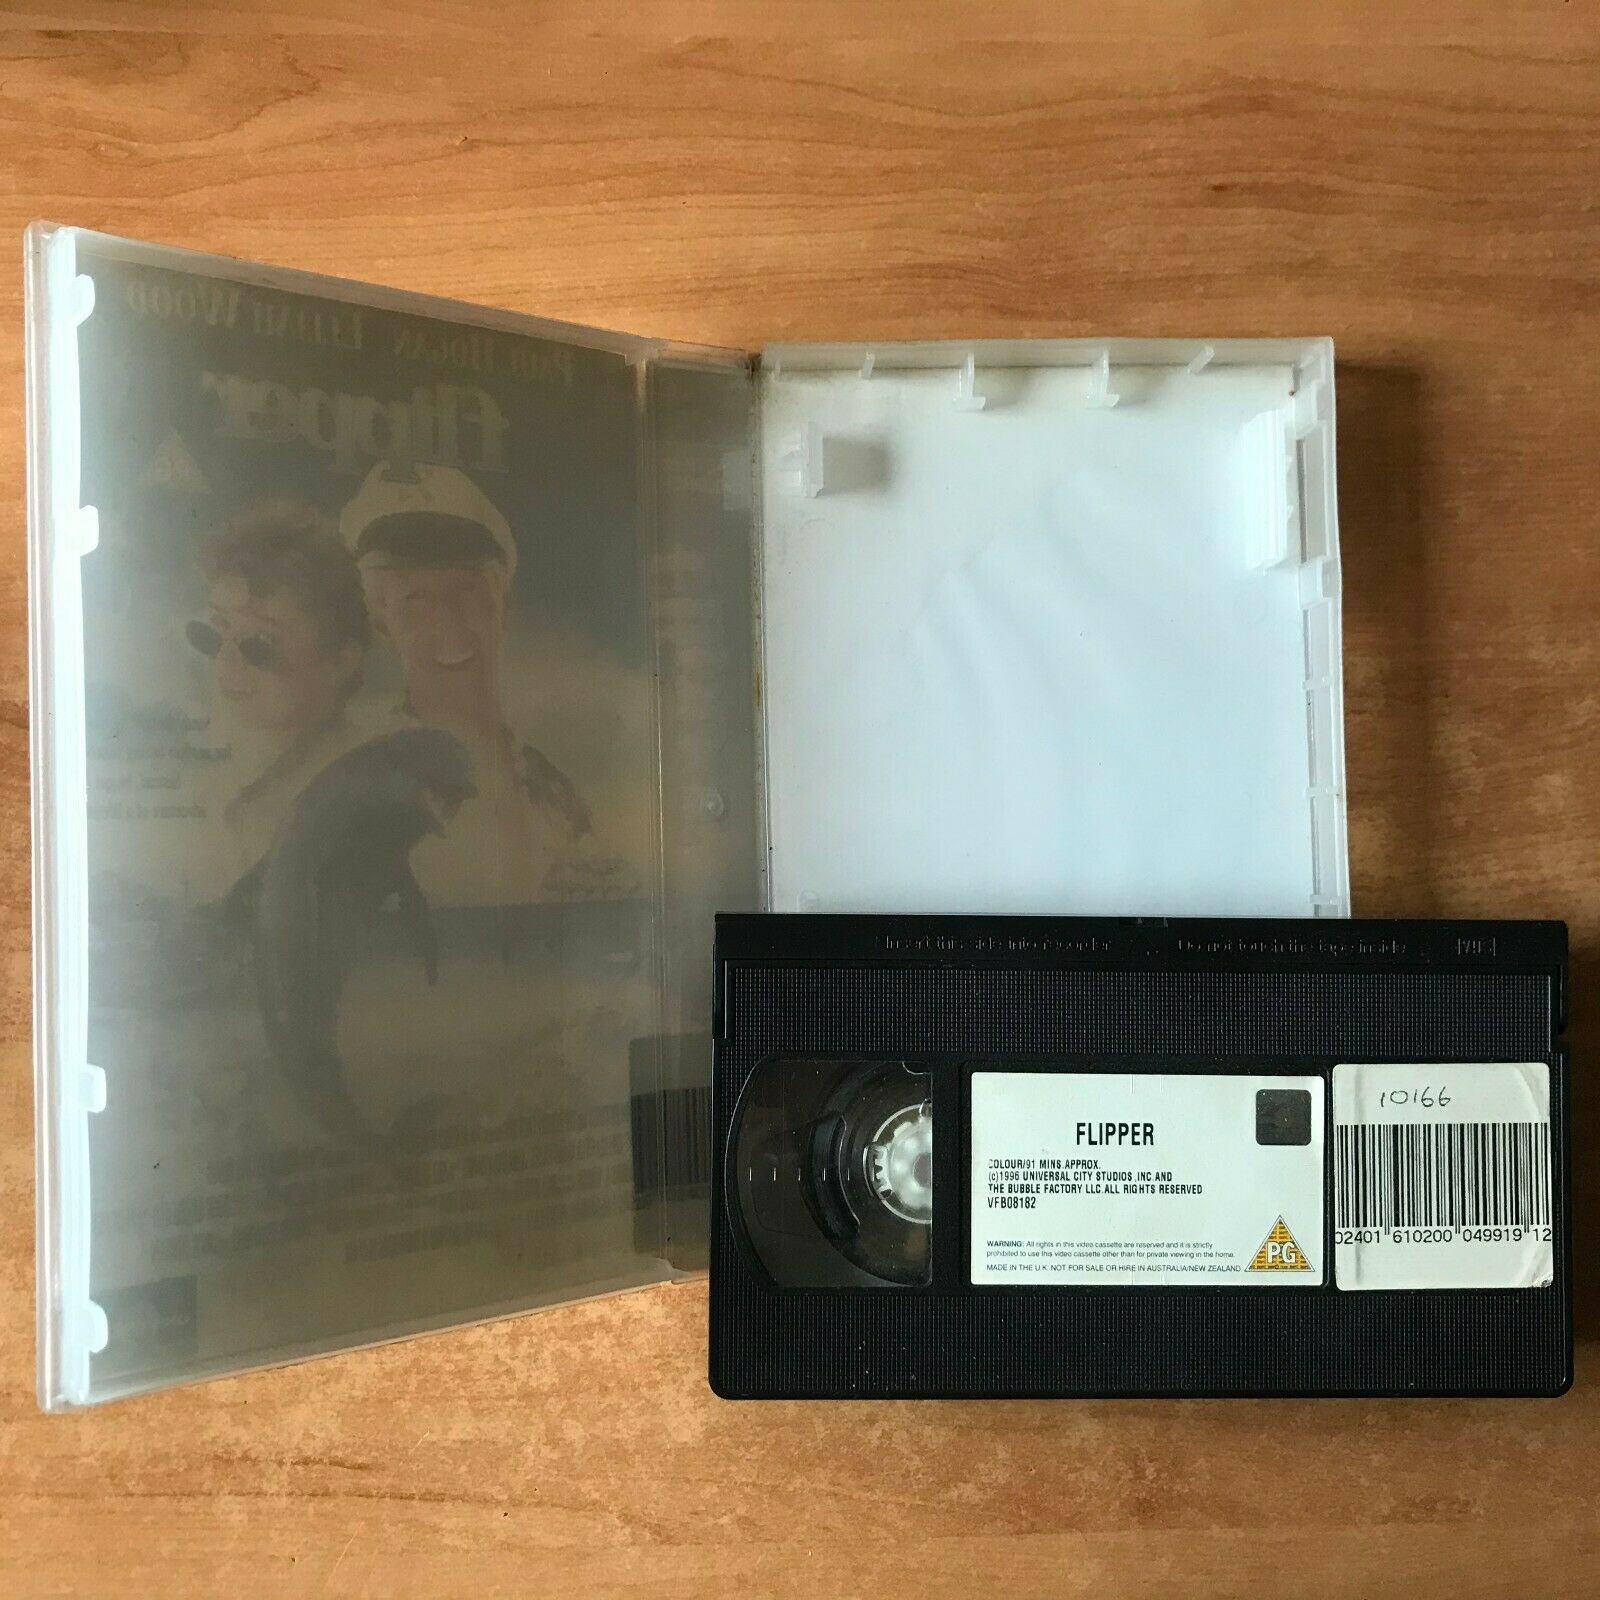 Flipper (1996): Florida Adventure [Large Box] Rental - Elijah Wood - Pal VHS-